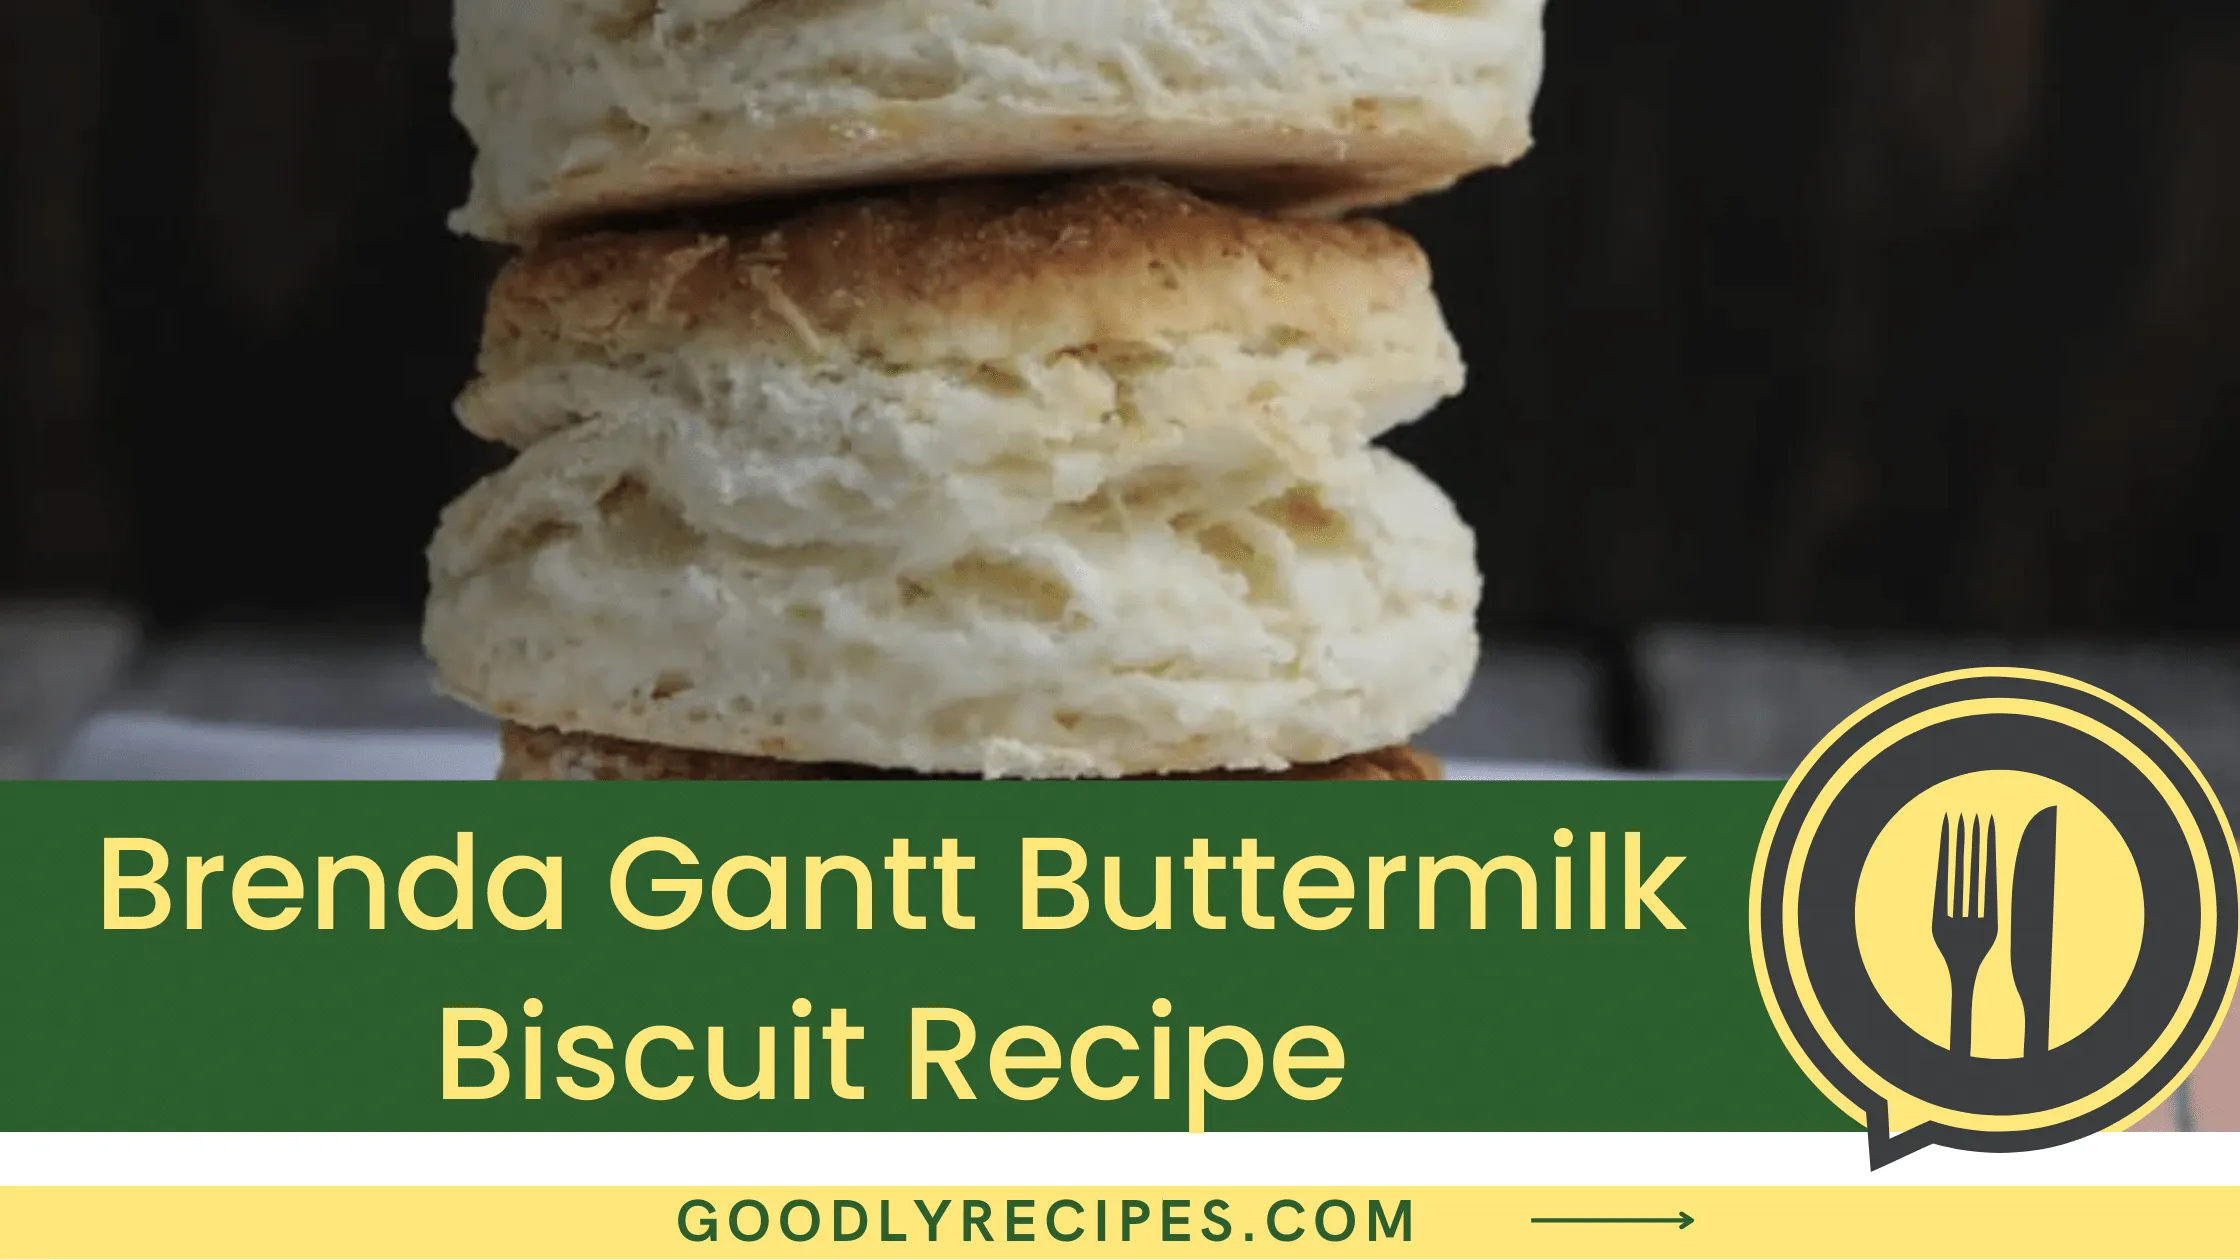 Brenda Gantt Buttermilk Biscuit Recipe - For Food Lovers